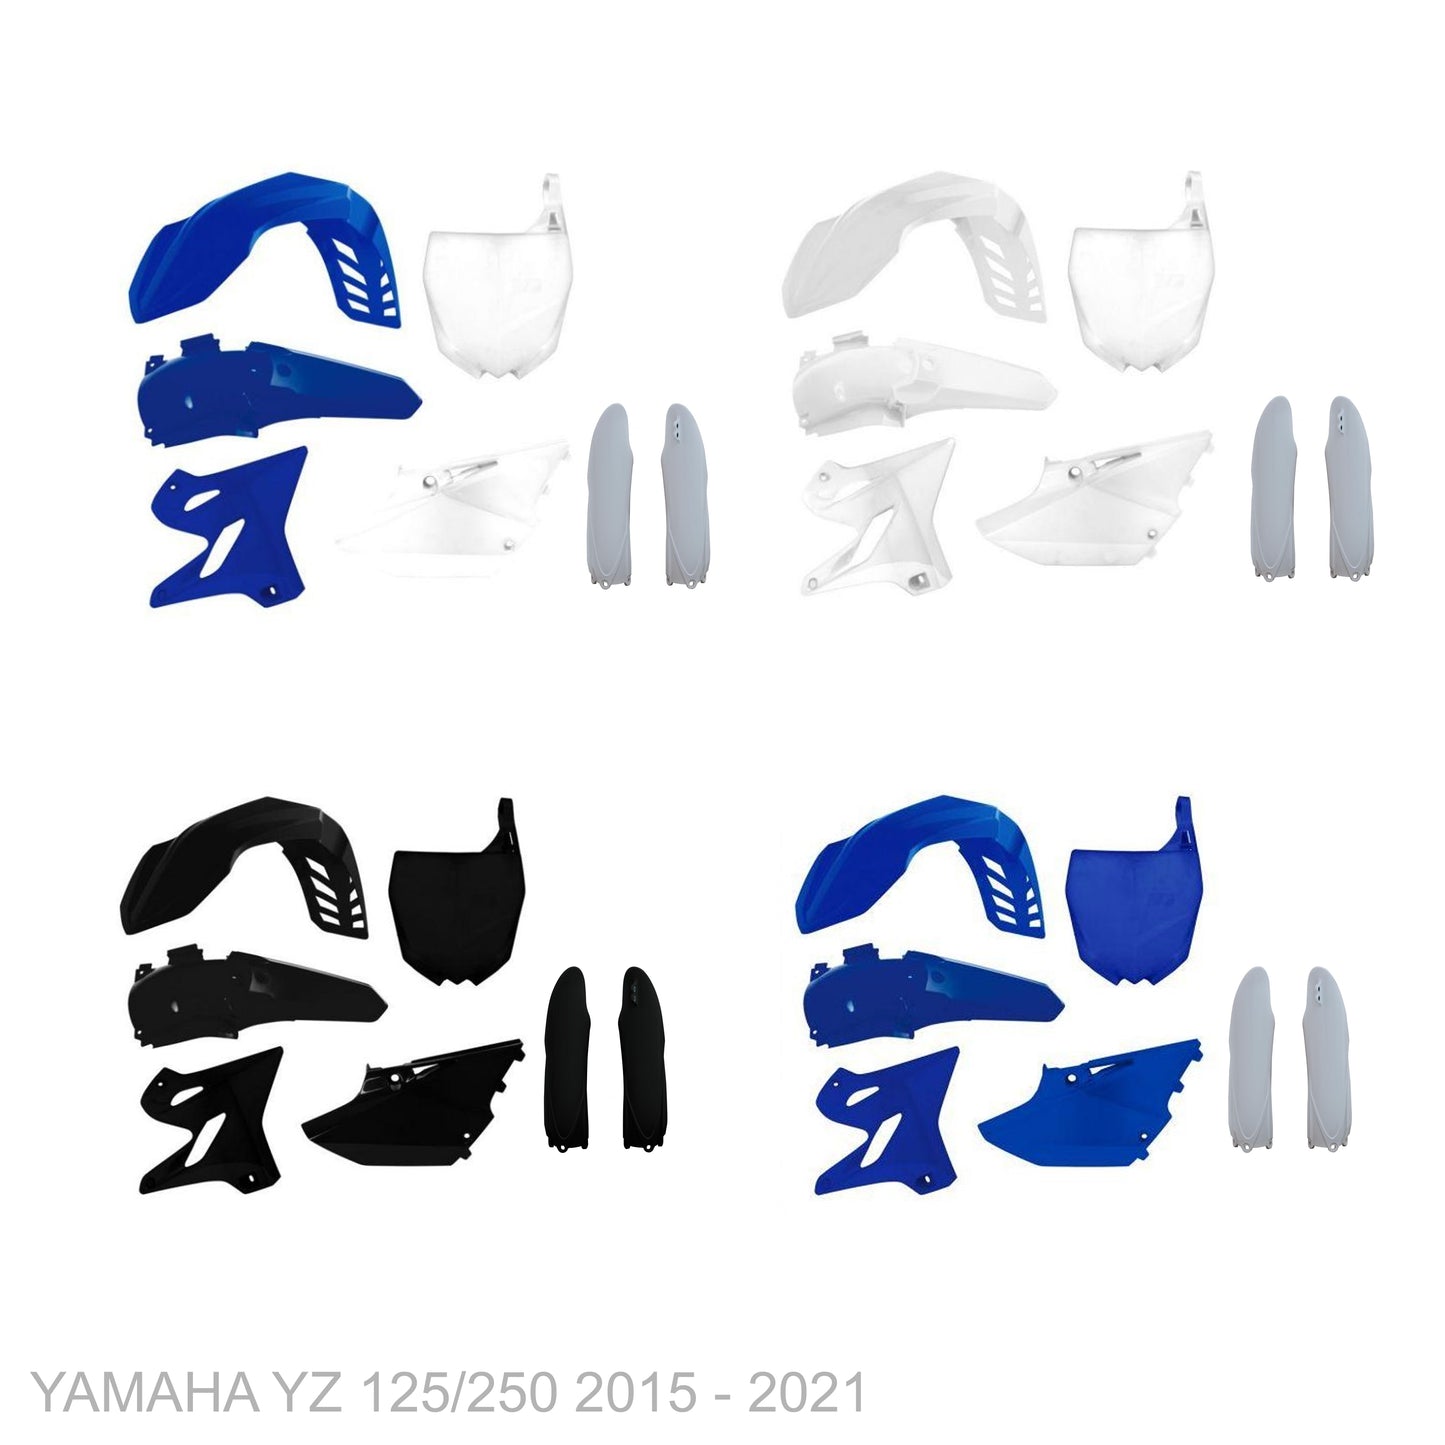 YAMAHA YZ 125/250 2015 - 2021 Factory Graphics Kit